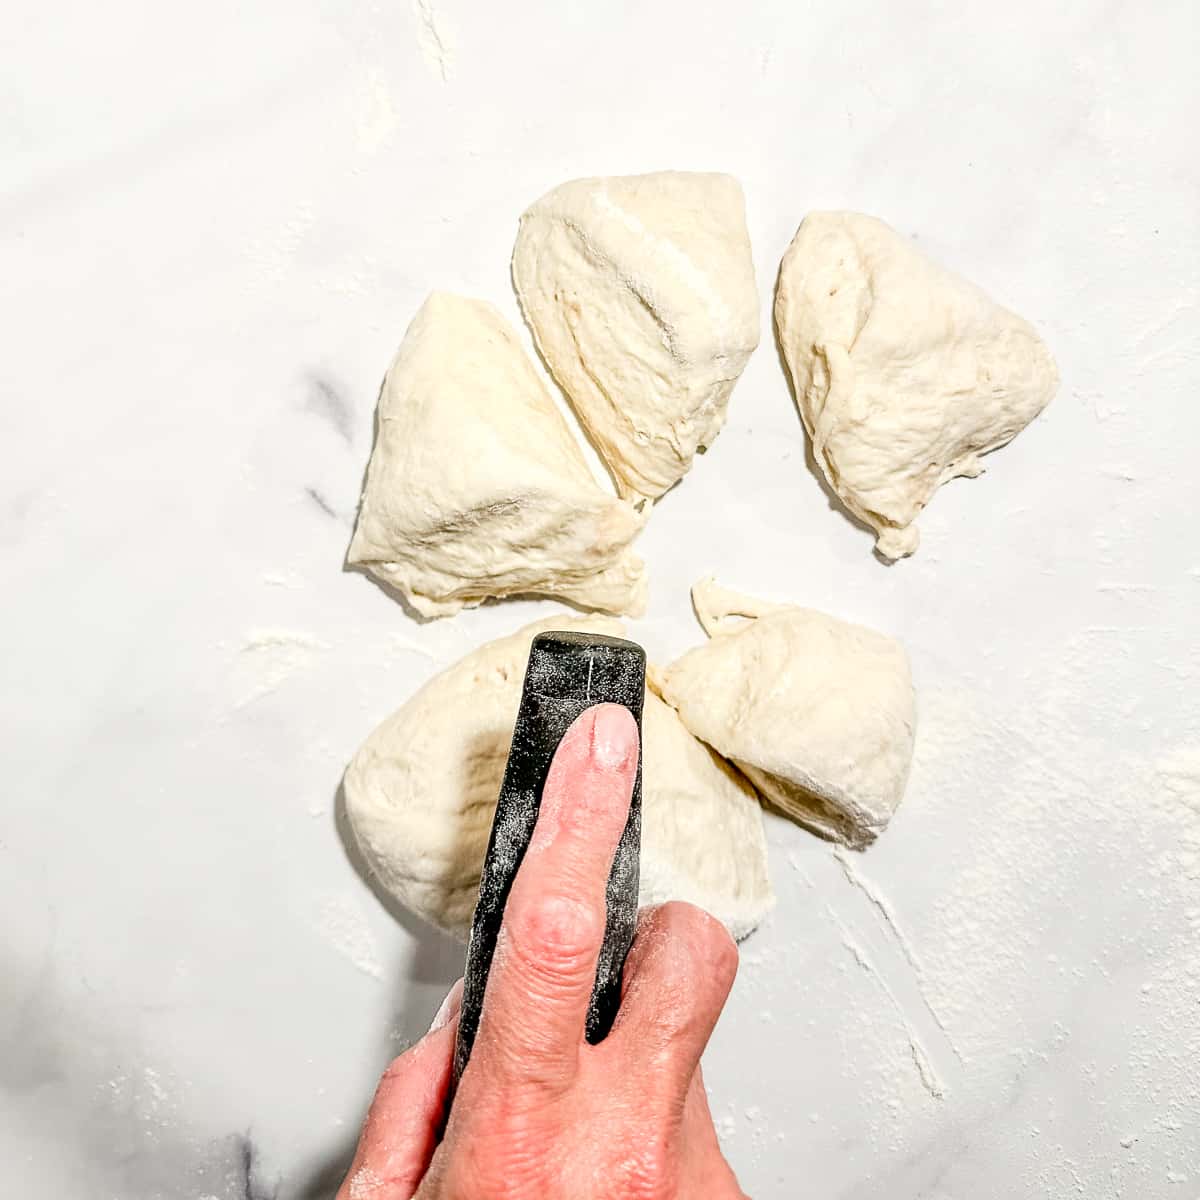 using a bench scraper to cut dough into six pieces.